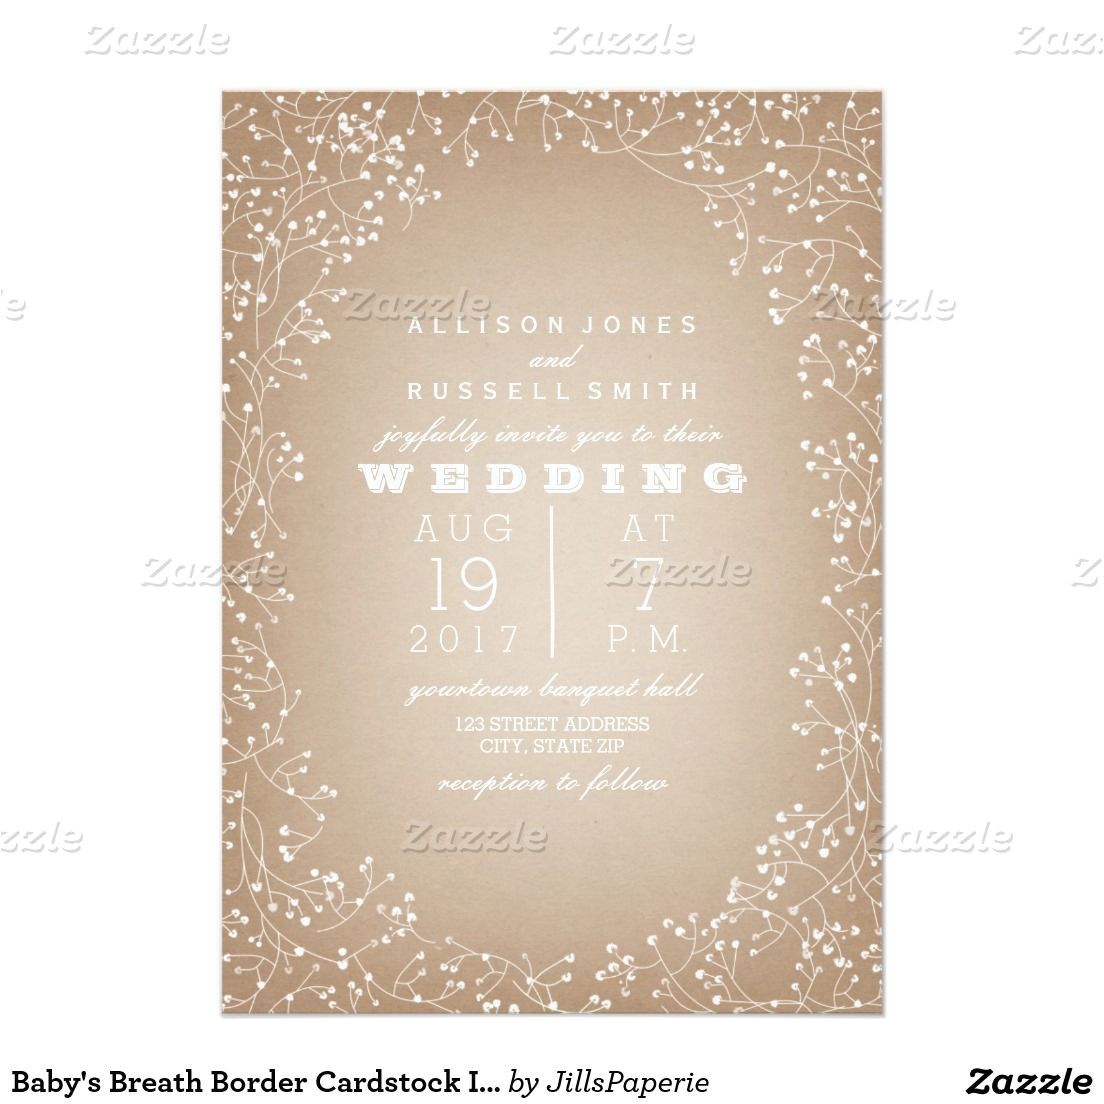 Card Stock for Wedding Invitations Baby S Breath Border Cardstock Inspired Invitation Zazzle